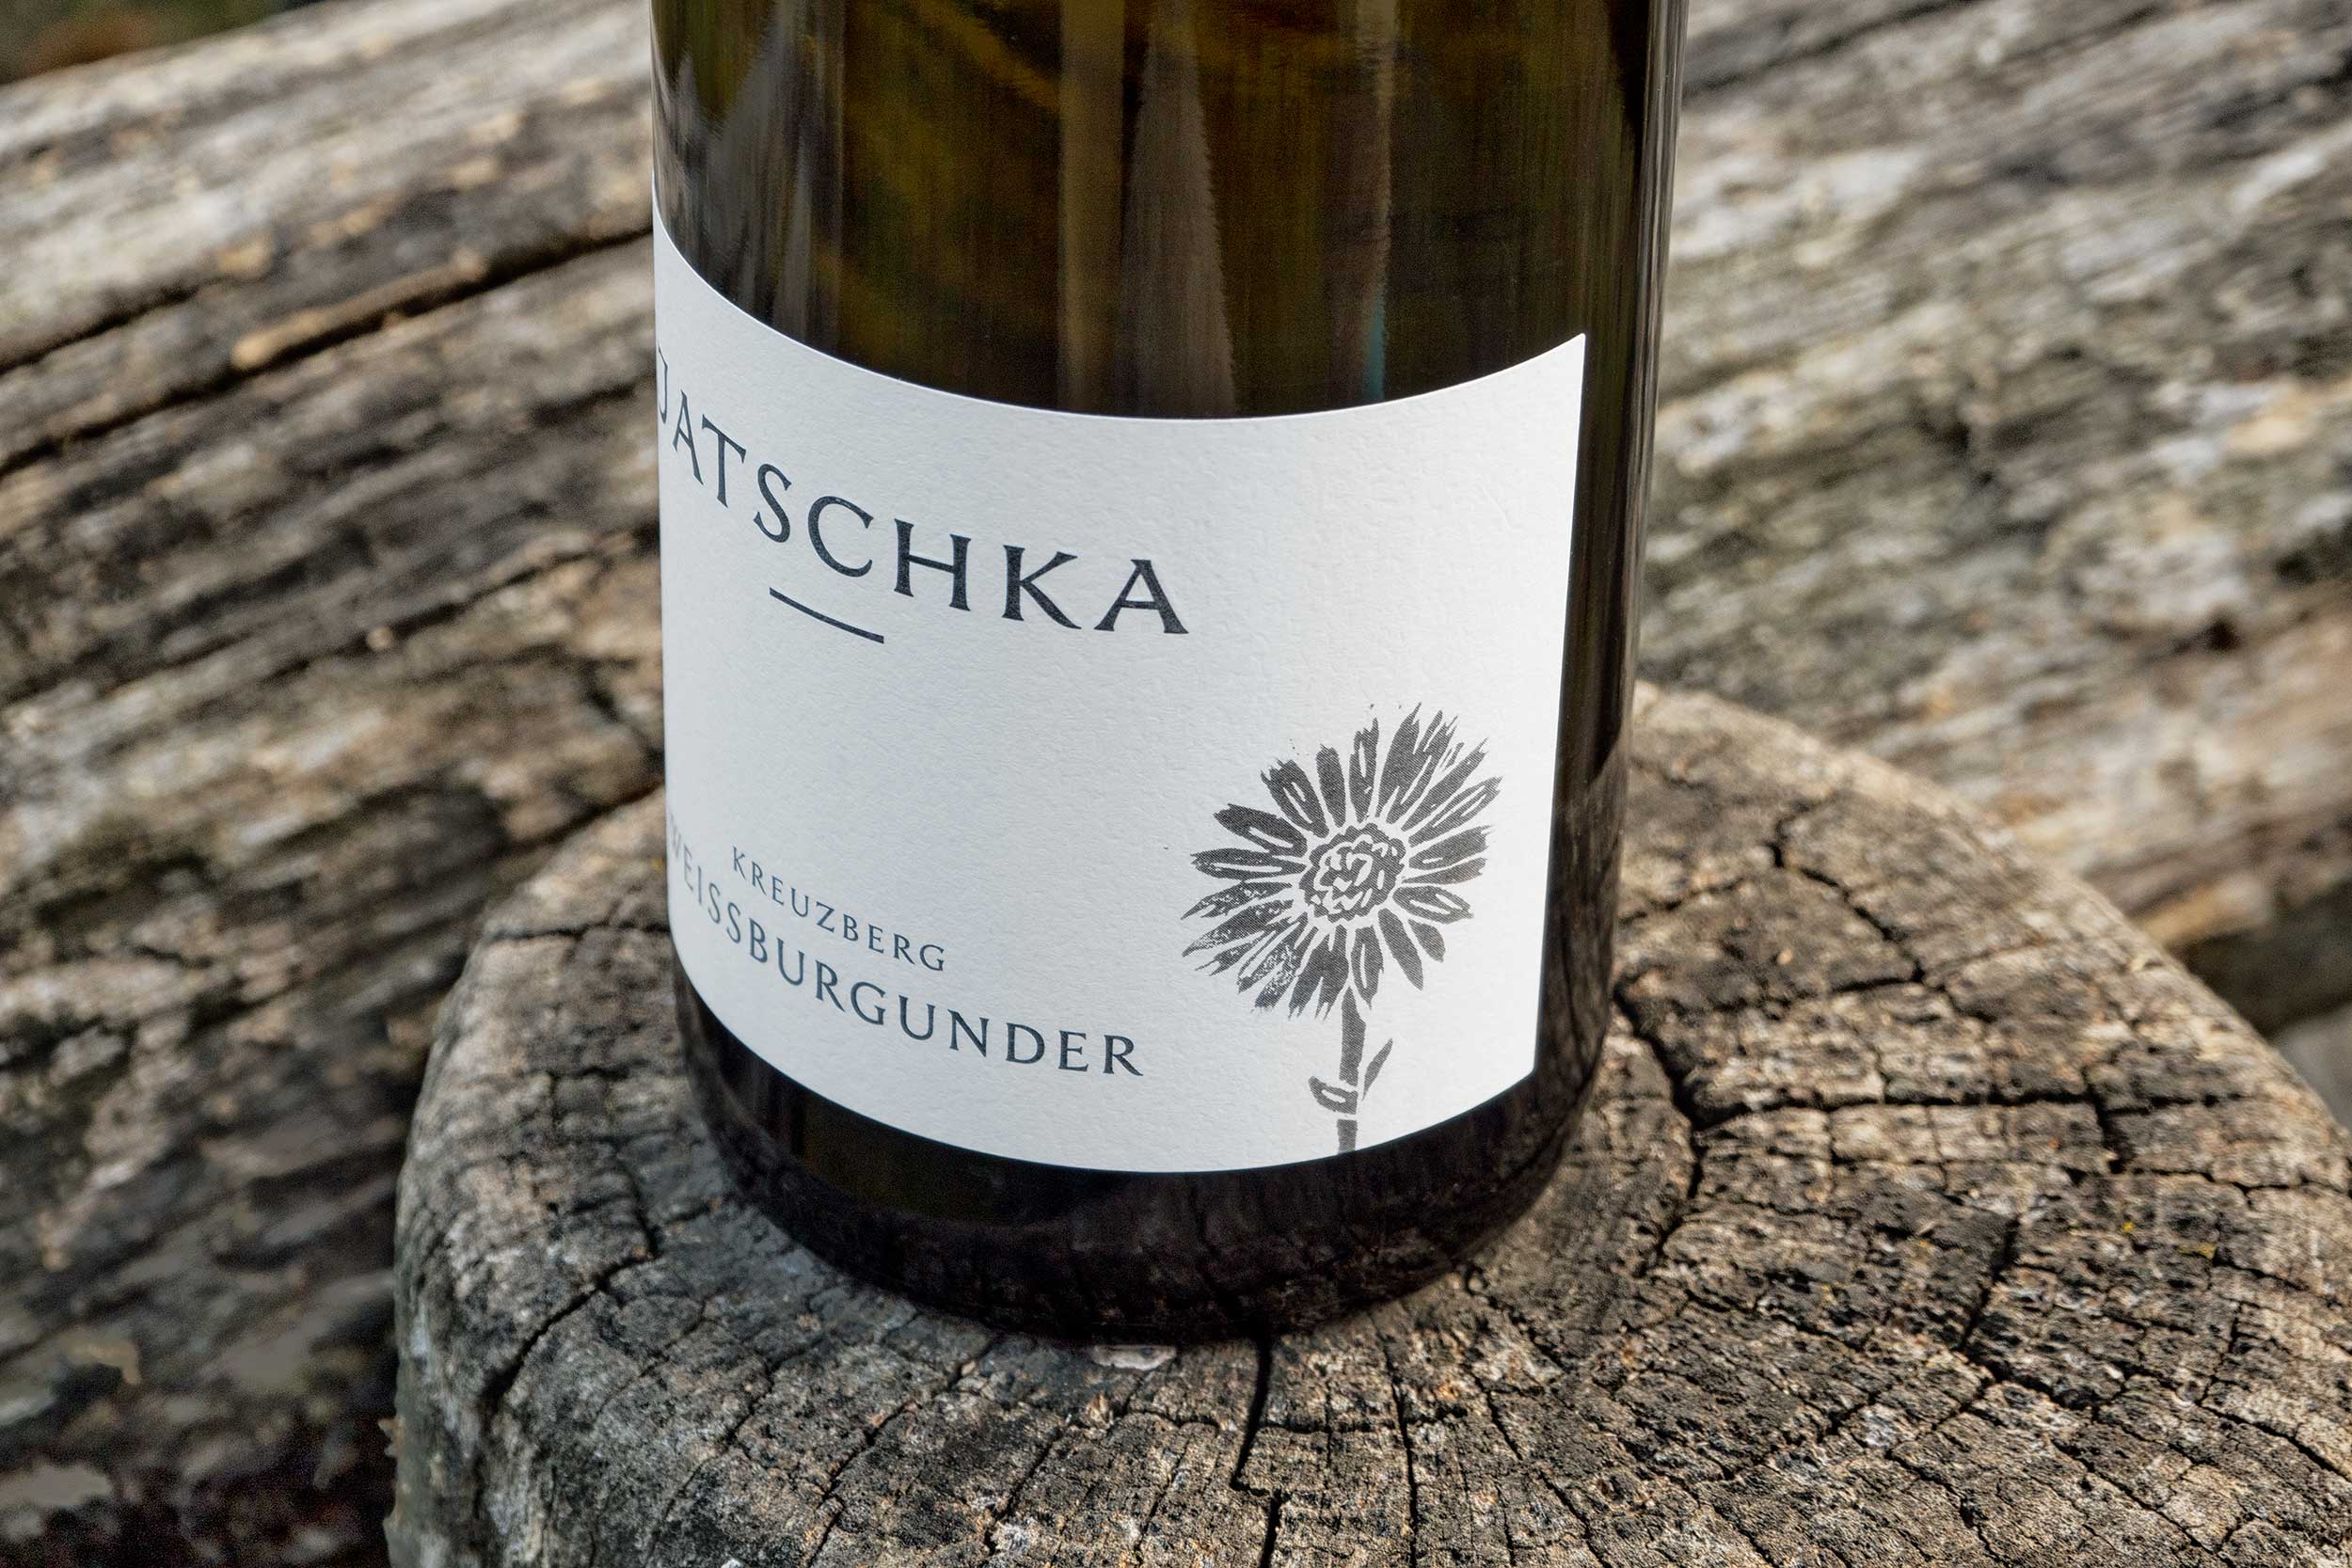 Etiketten Weingut Jatschka · Branding Agentur Wien